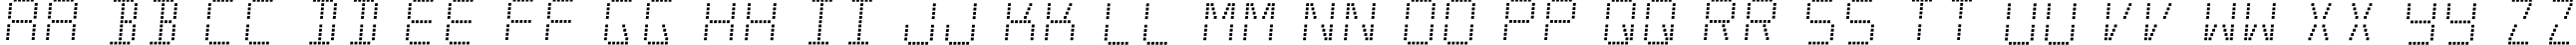 Пример написания английского алфавита шрифтом Minisystem